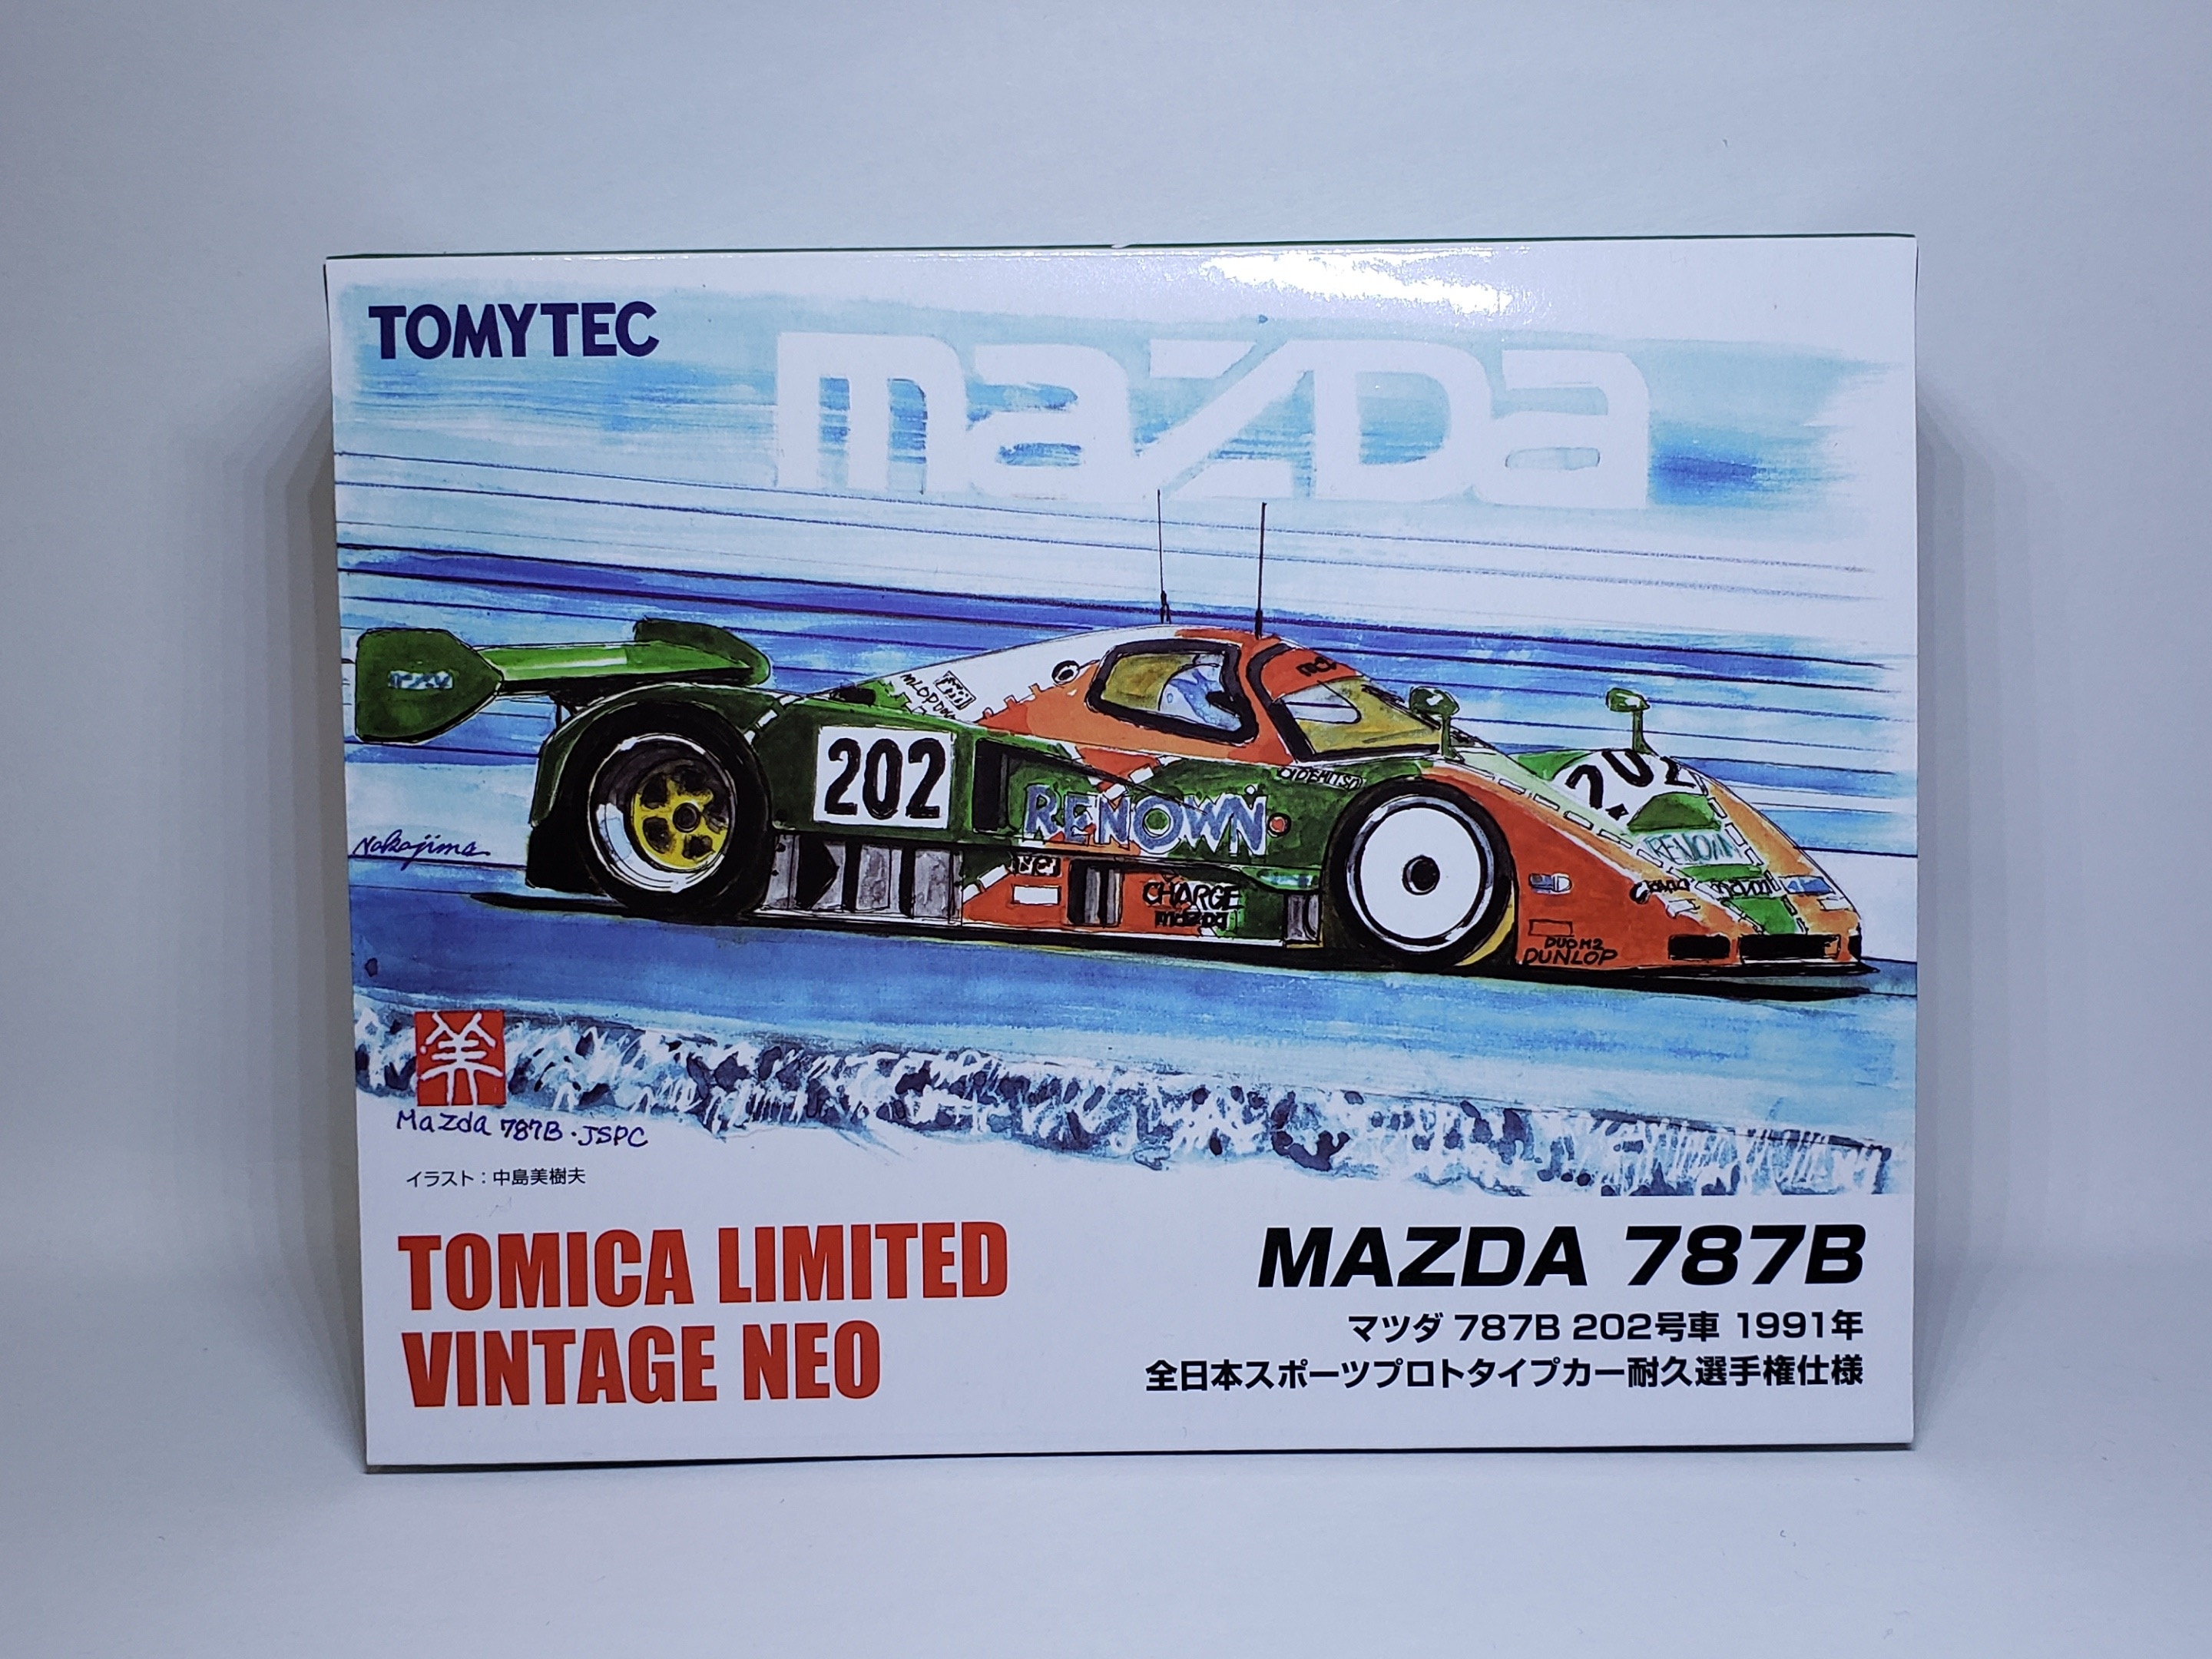 Tomytec Tomica Limited Vintage NEO Mazda 787B #202